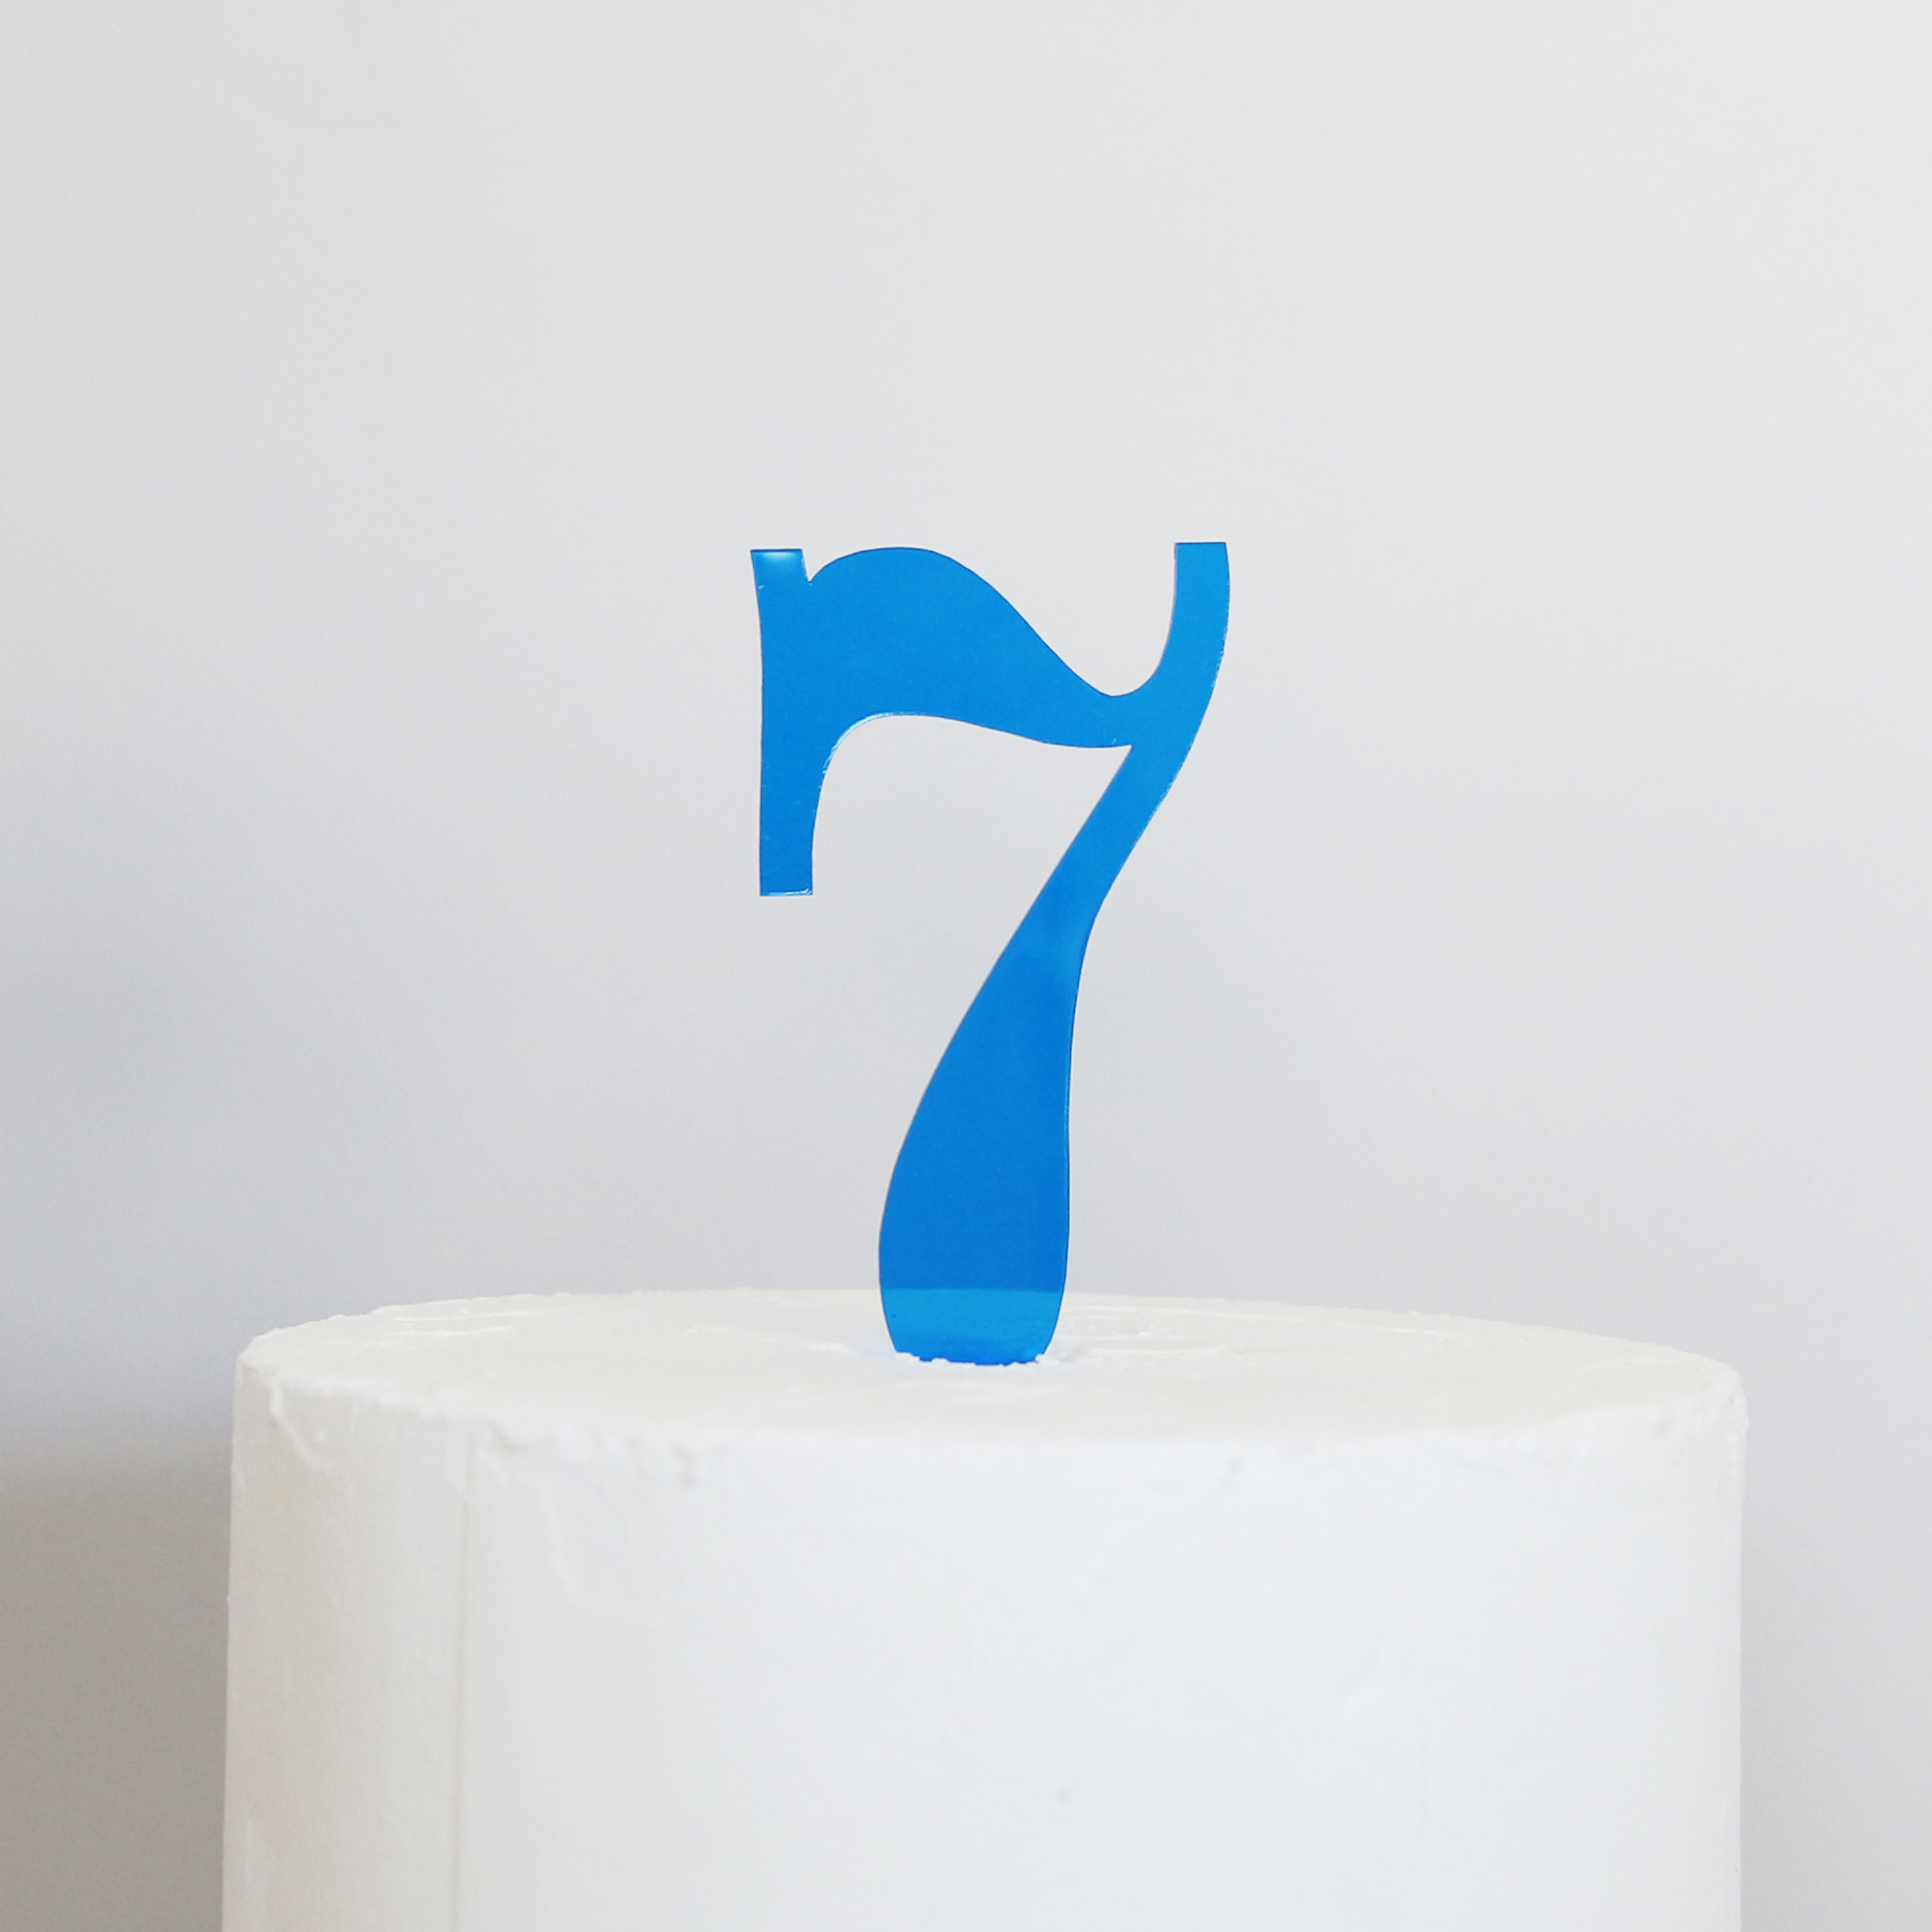 Number 7 Cake Design Ideas| Number 7 Chocolate Cake - YouTube